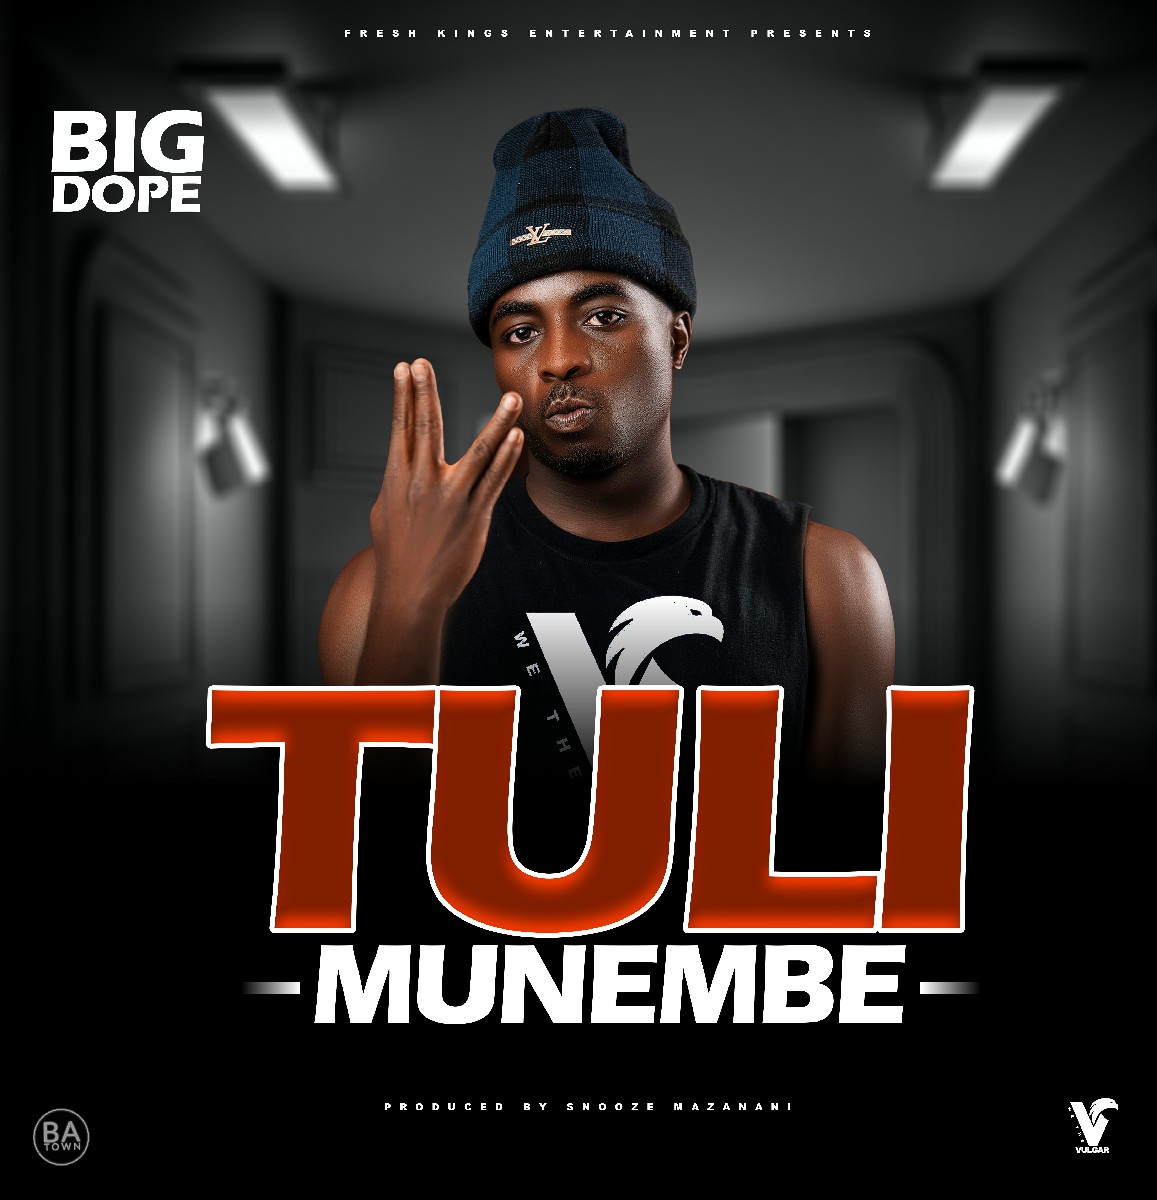 Big Dope - Tuli Munembe